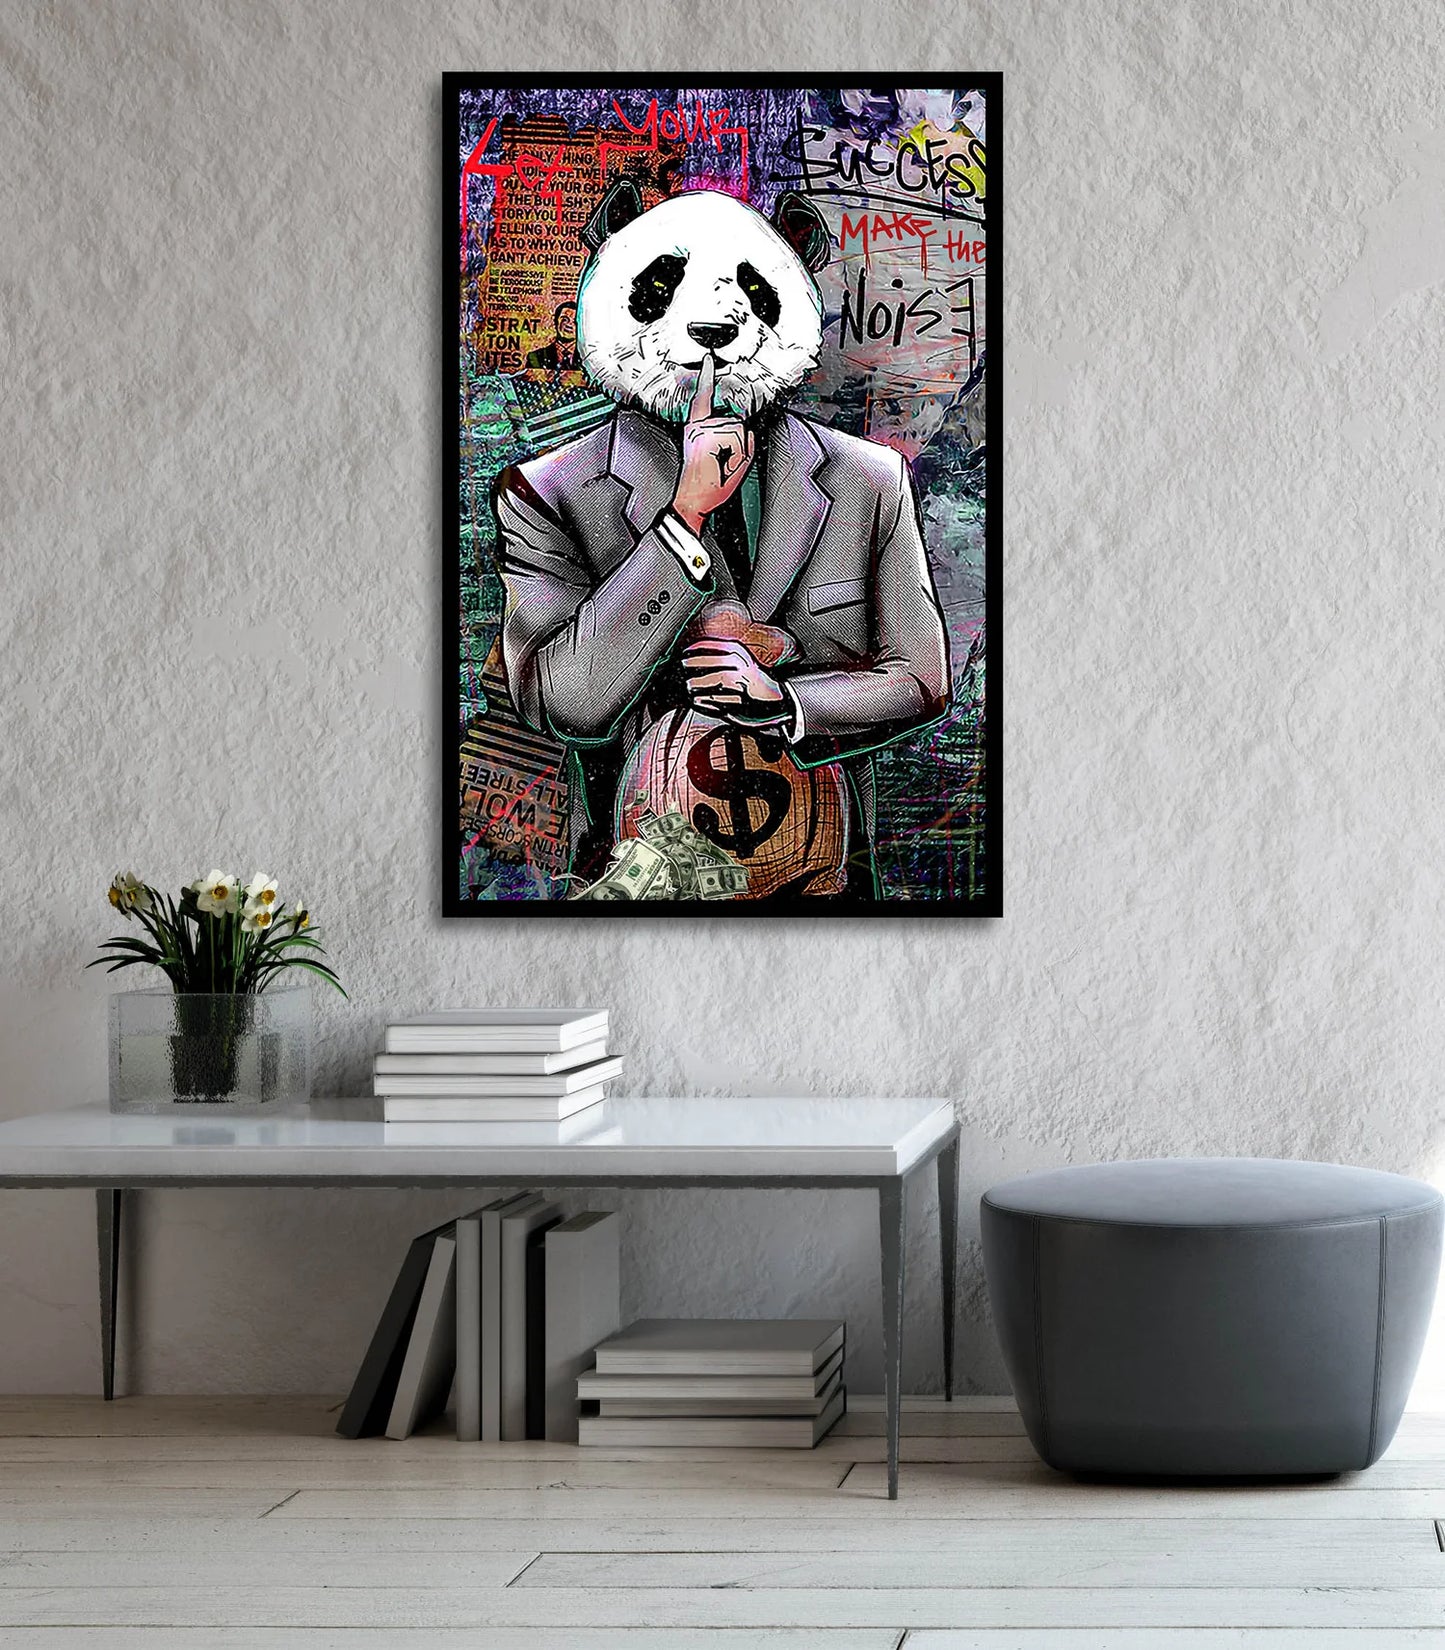 Let Your Success Make the Noise - Panda Boss